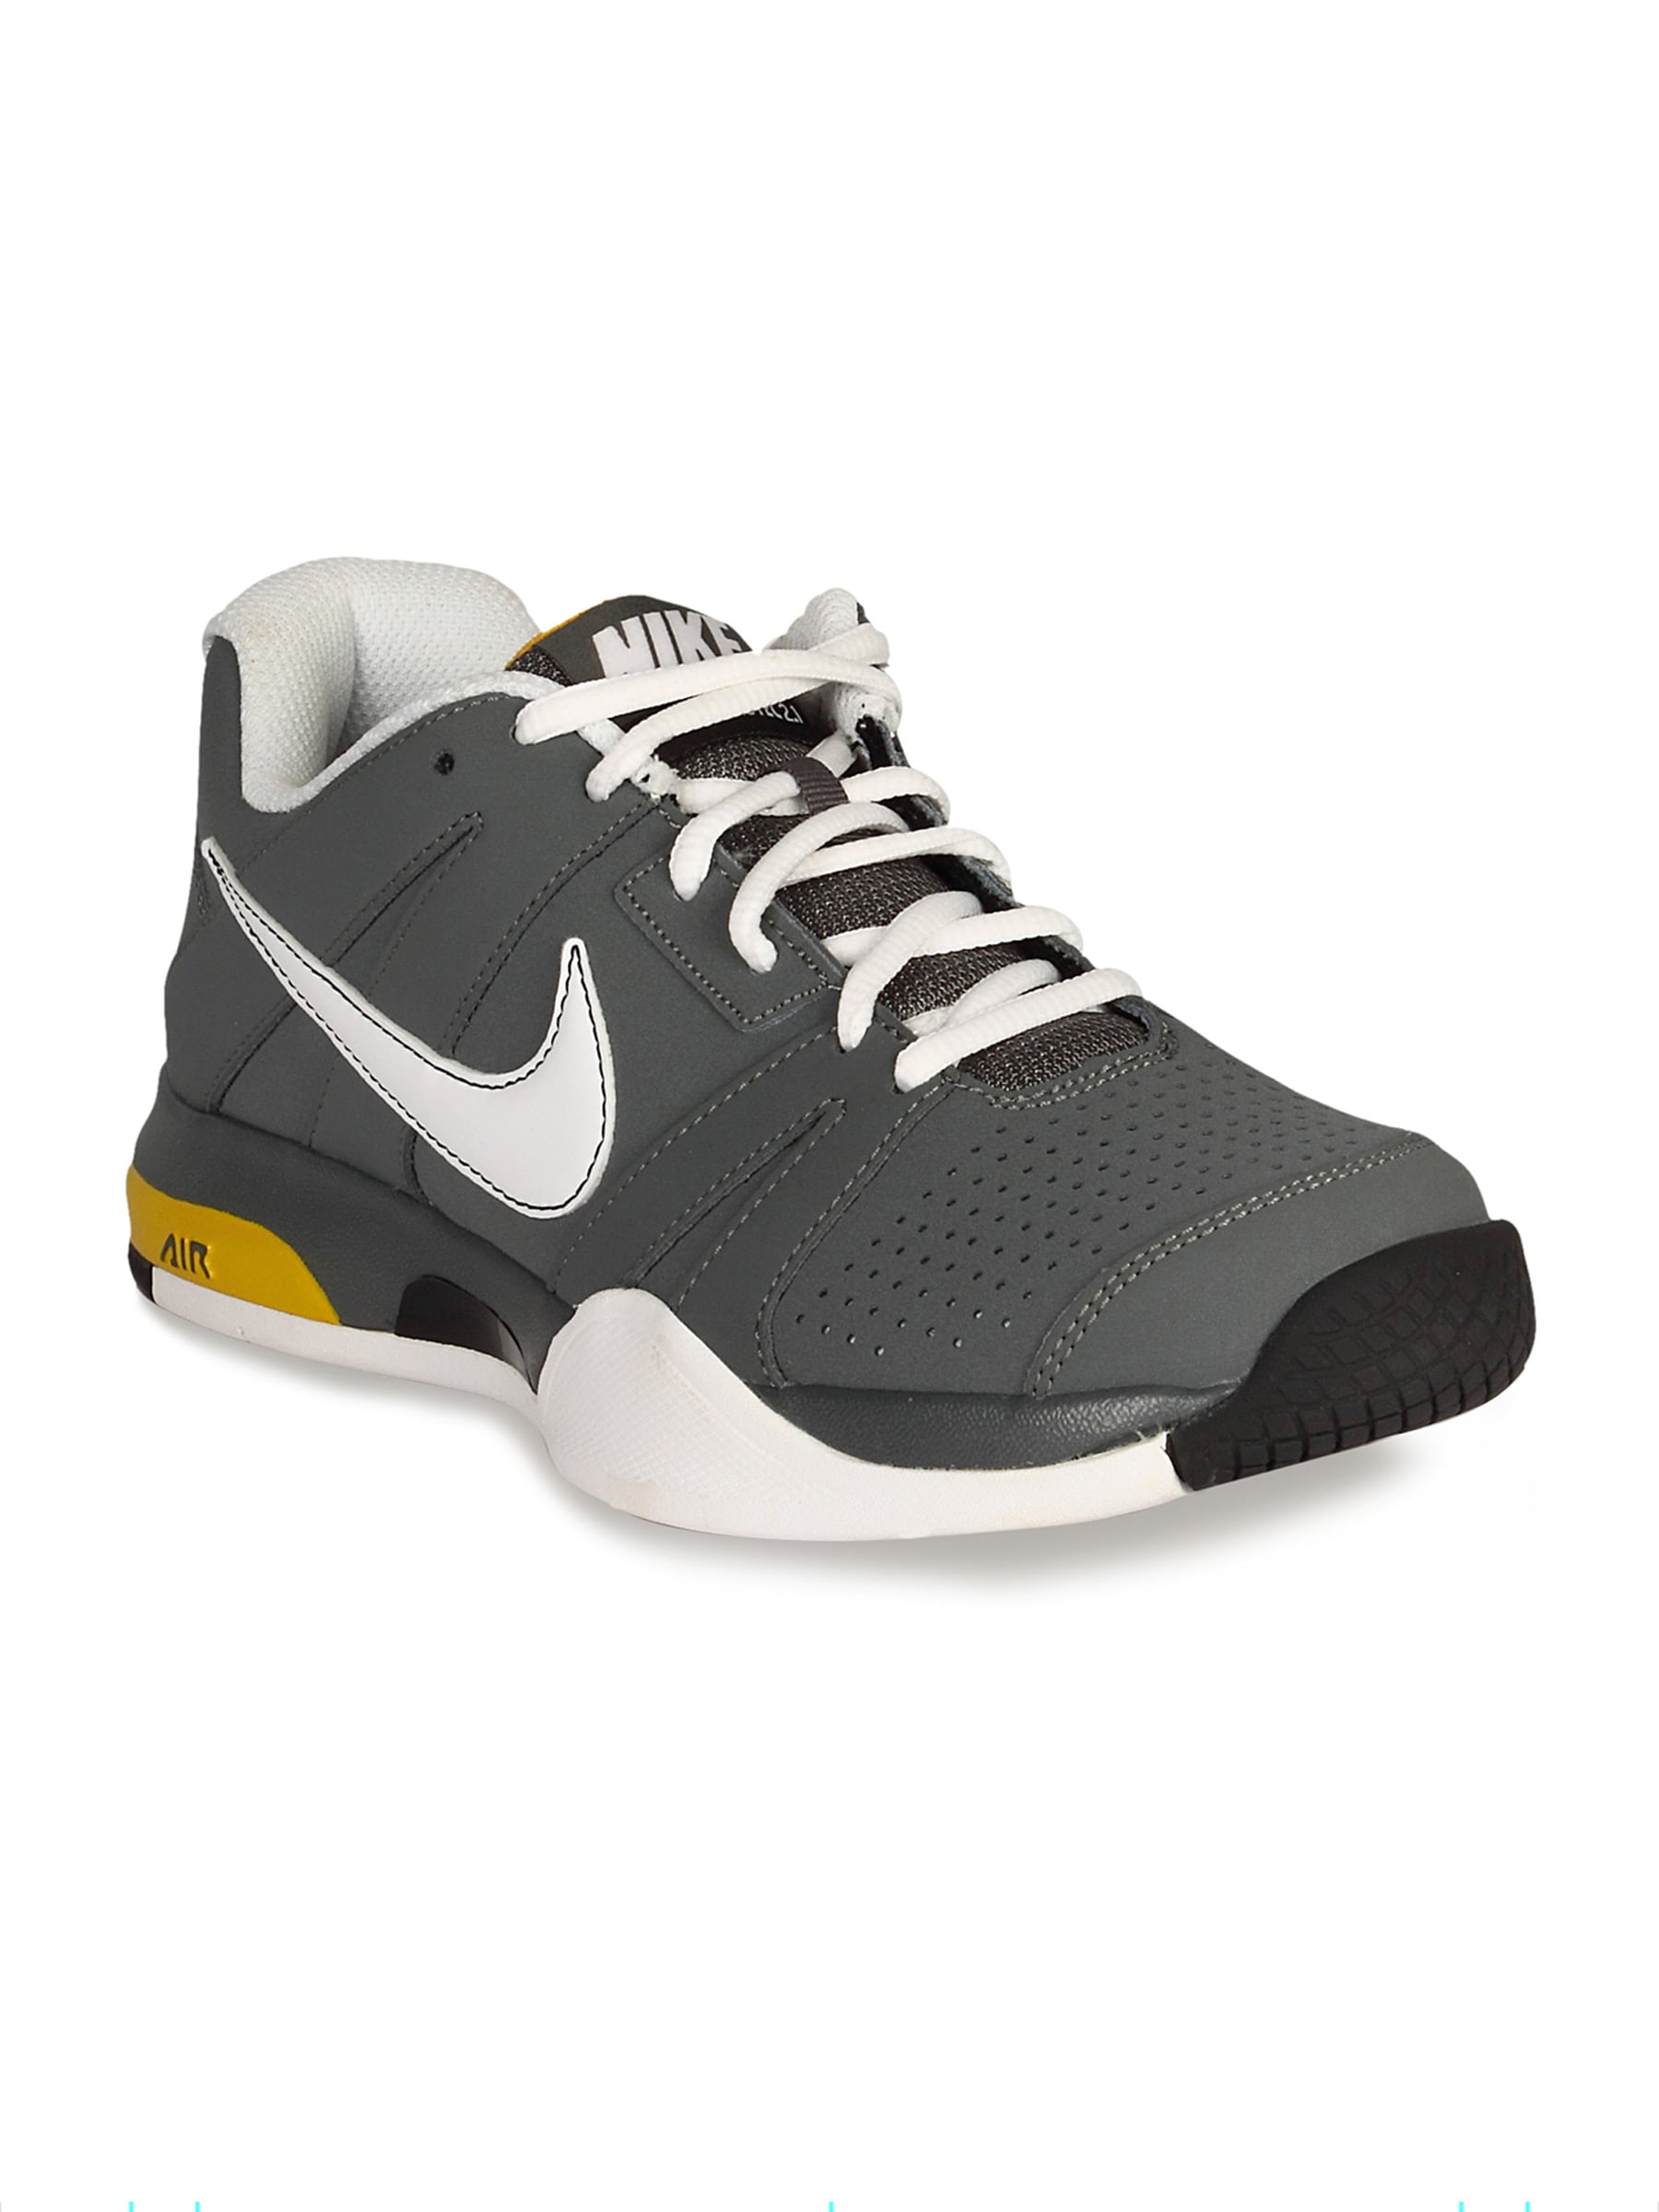 Nike Men's Air Coutblastic Grey White Black Shoe